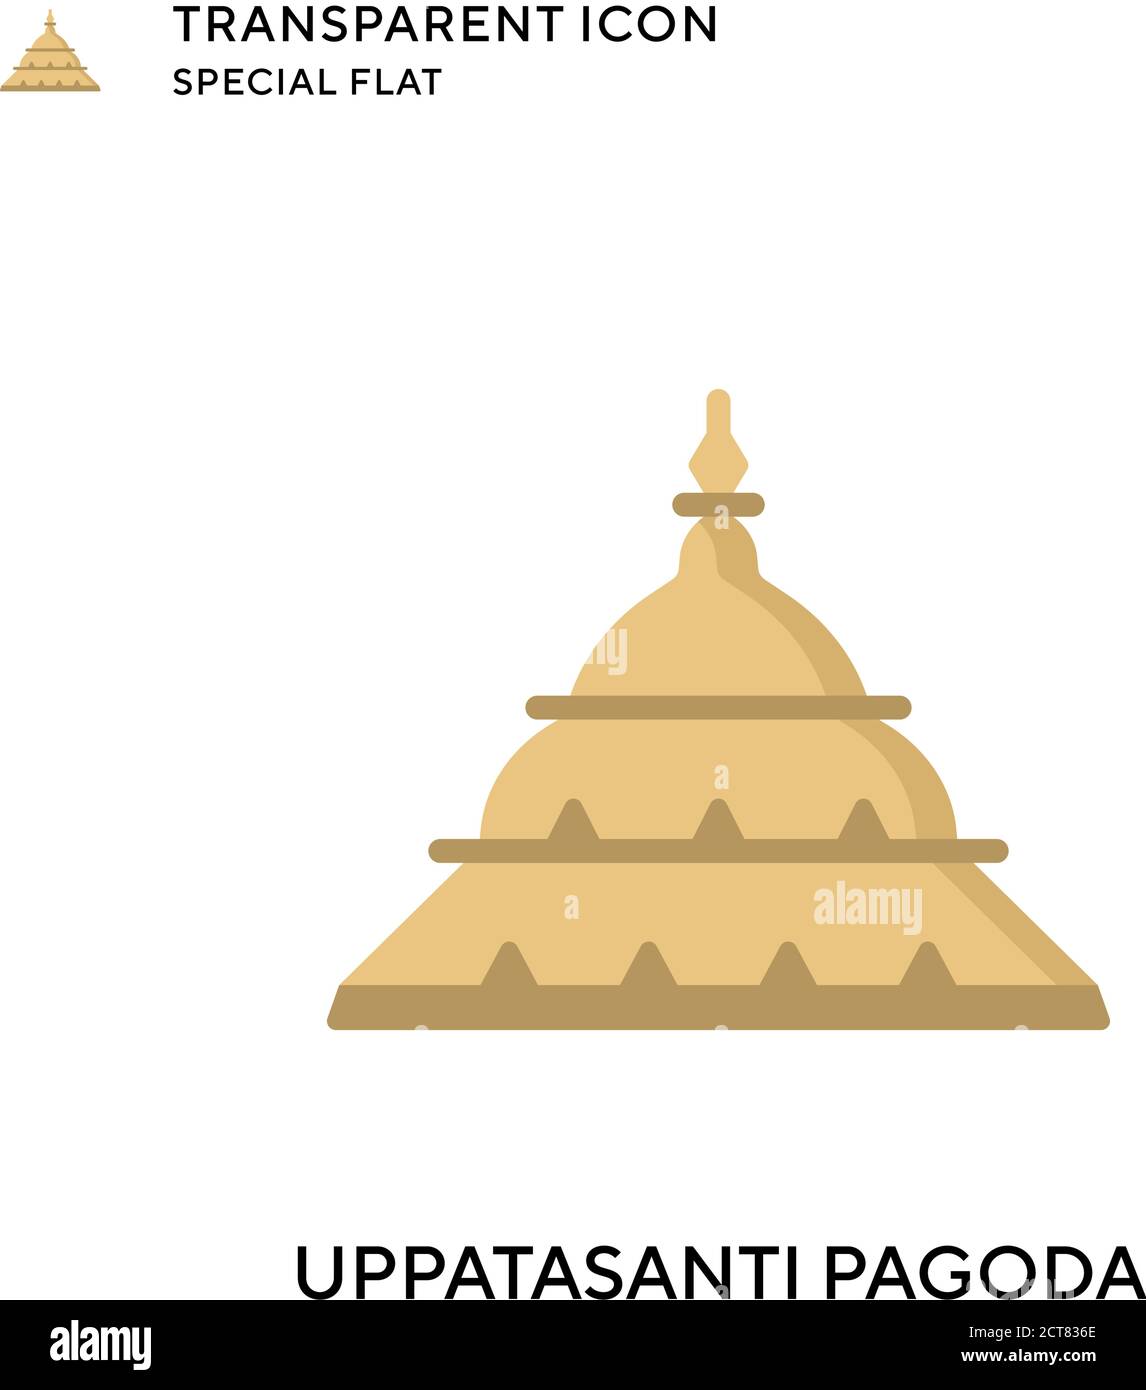 Uppatasanti pagoda vector icon. Flat style illustration. EPS 10 vector. Stock Vector